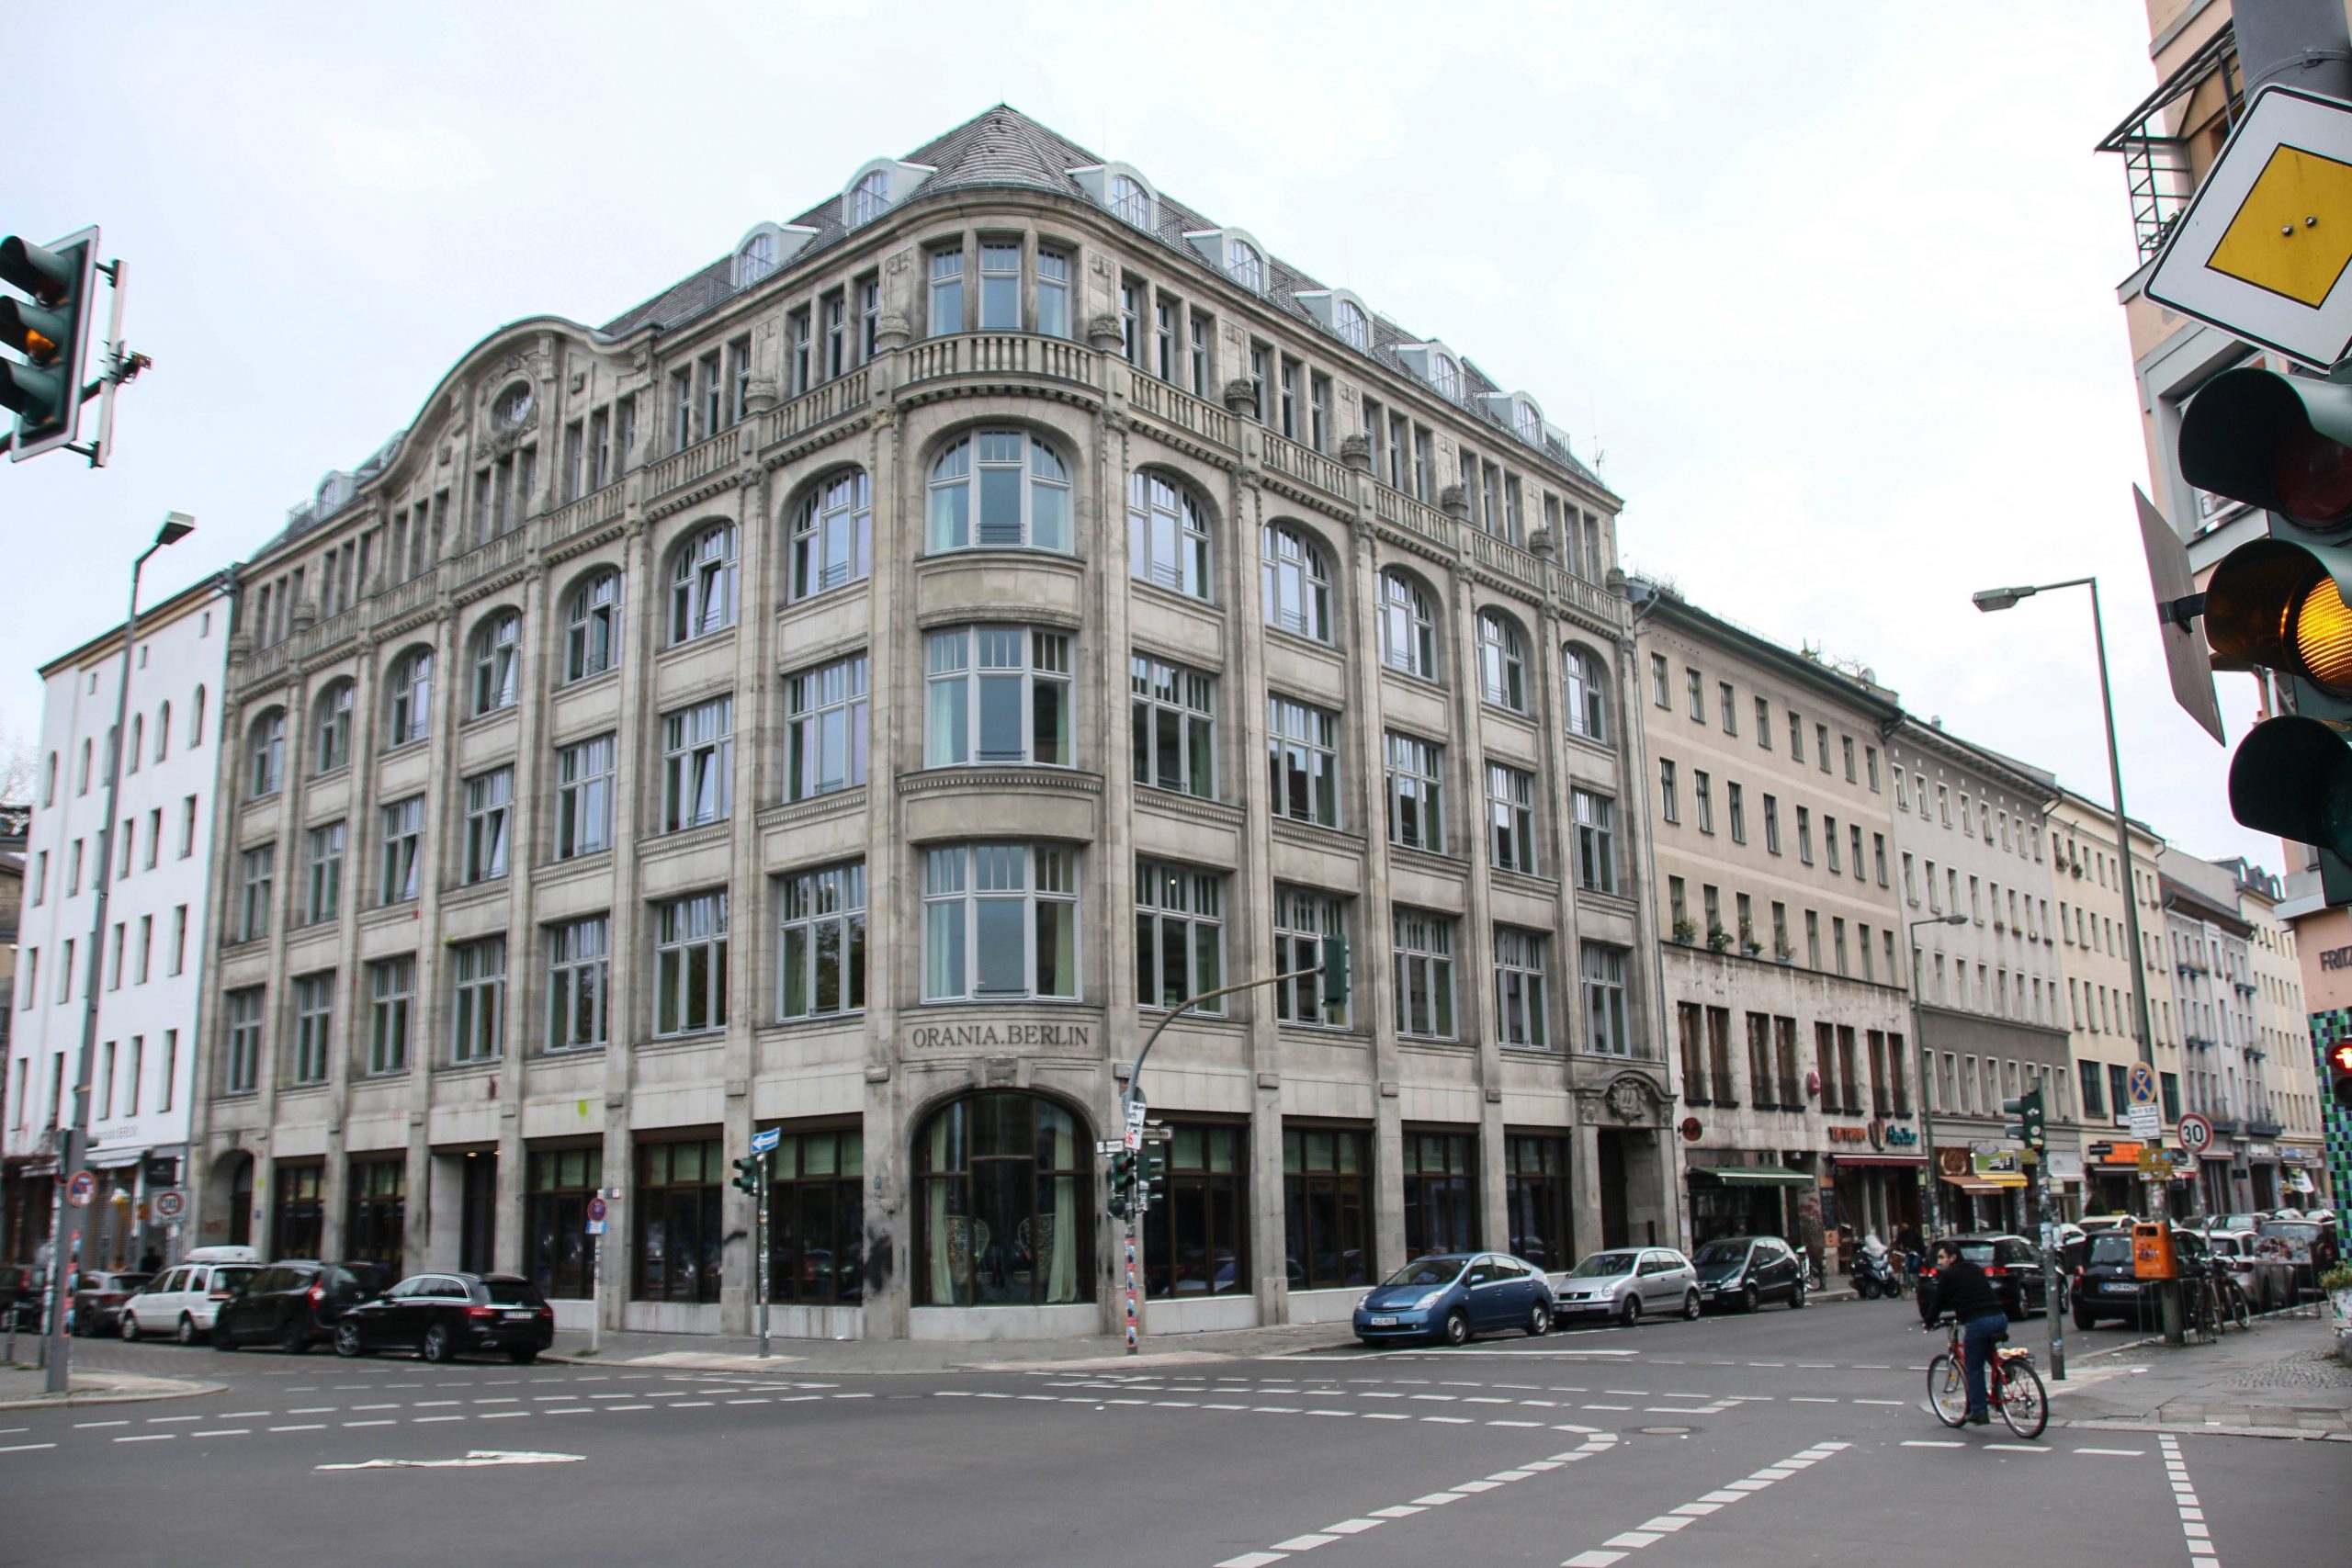 Das Hotel Orania in der Oranienstraße in Kreuzberg.